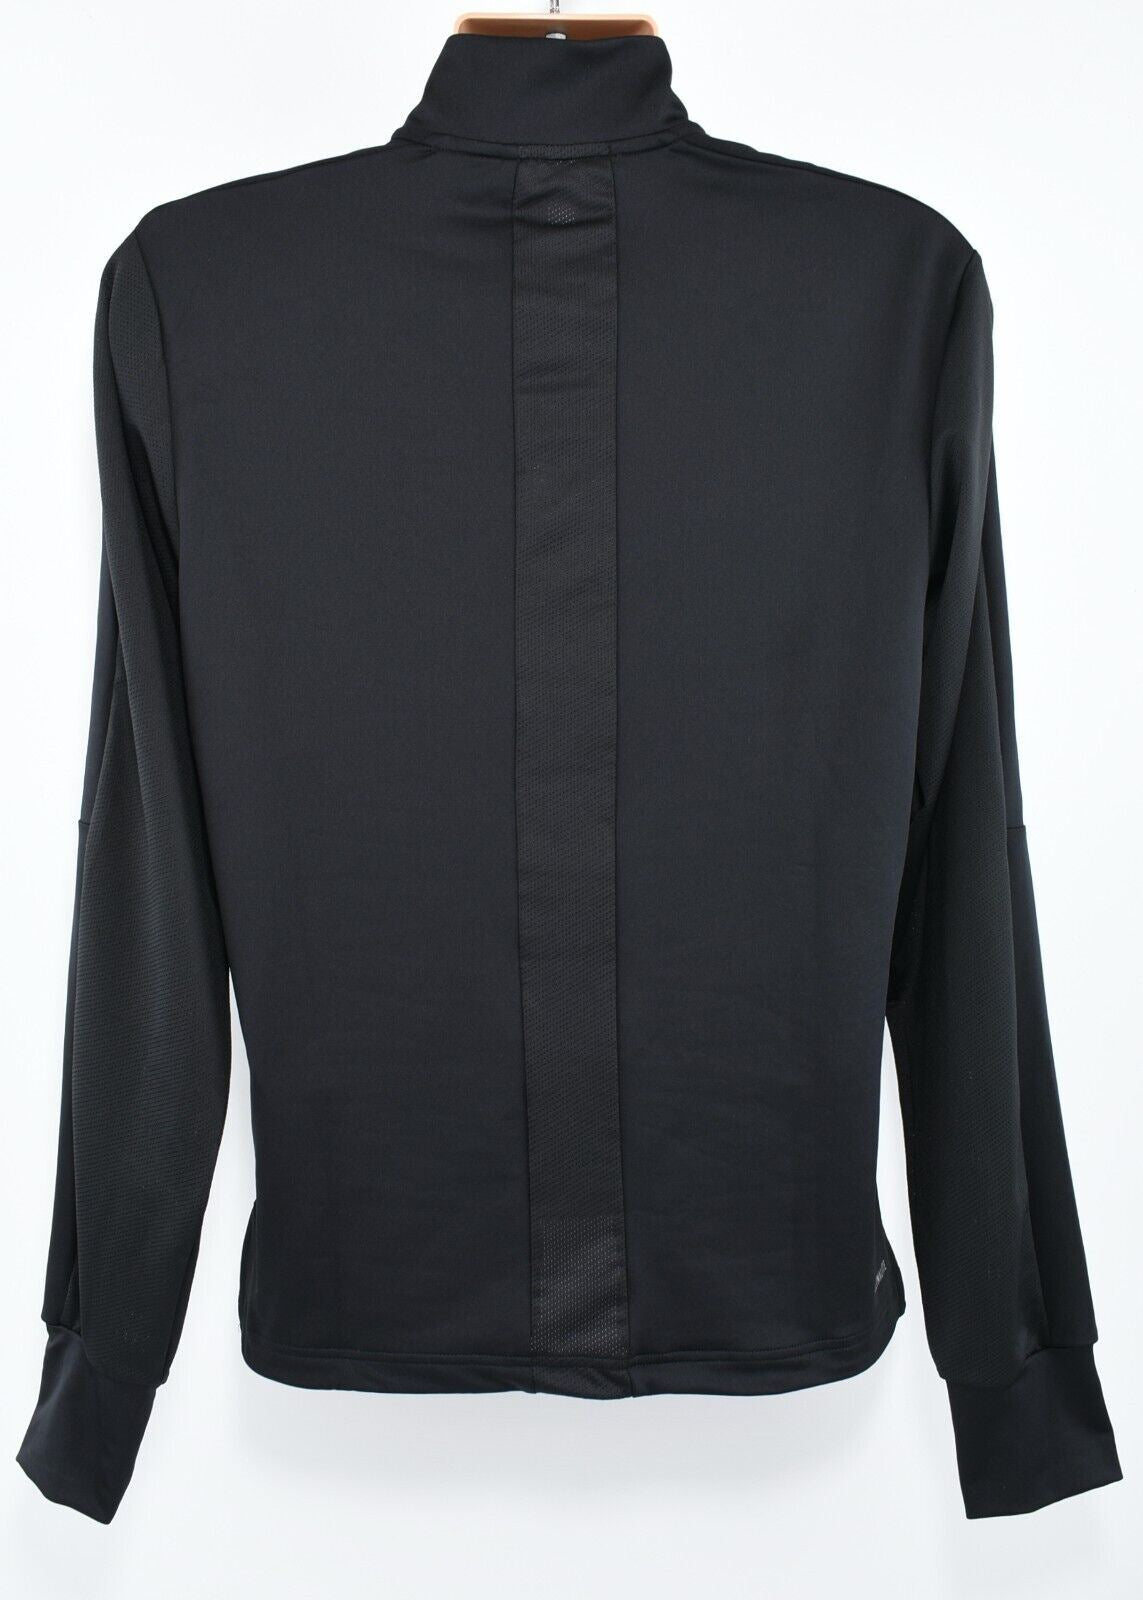 ADIDAS Men's SERENO PRO 1/4 Zip Neck Long Sleeve Top, Black, size S